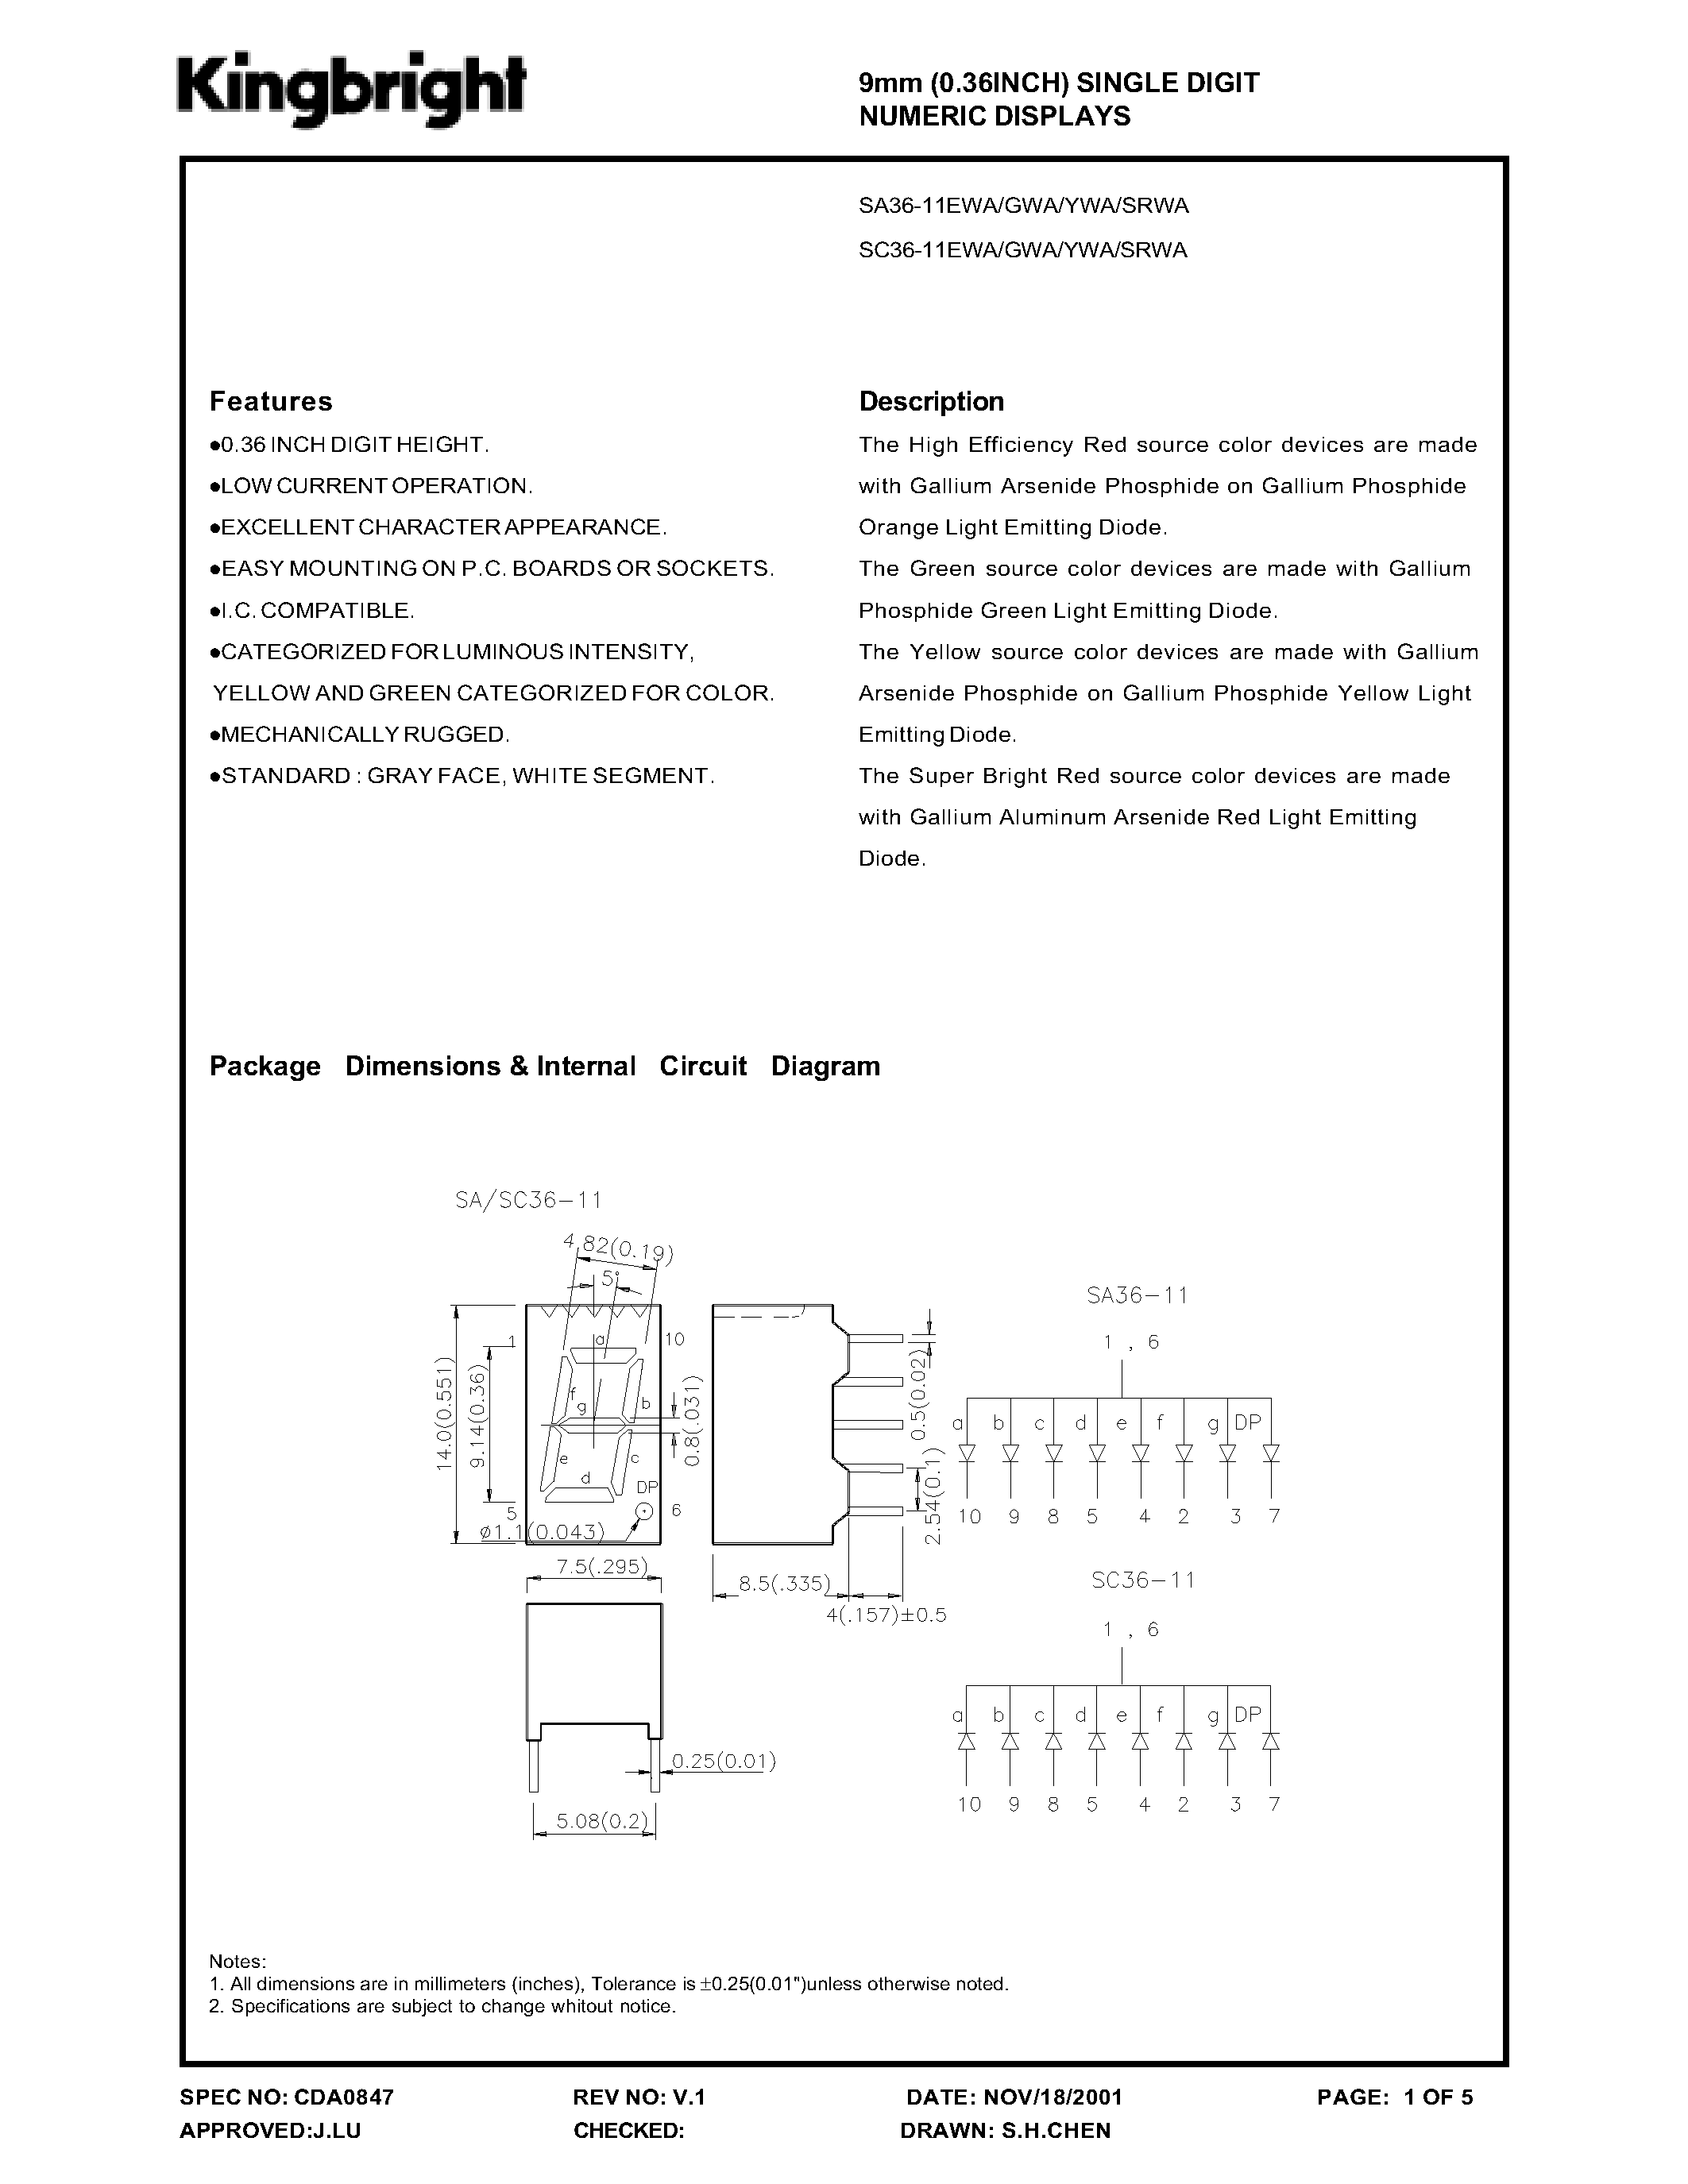 Datasheet SA36-11YWA - 9mm(0.36INCH) SINGLE DIGIT NUMERIC DISPLAYS page 1